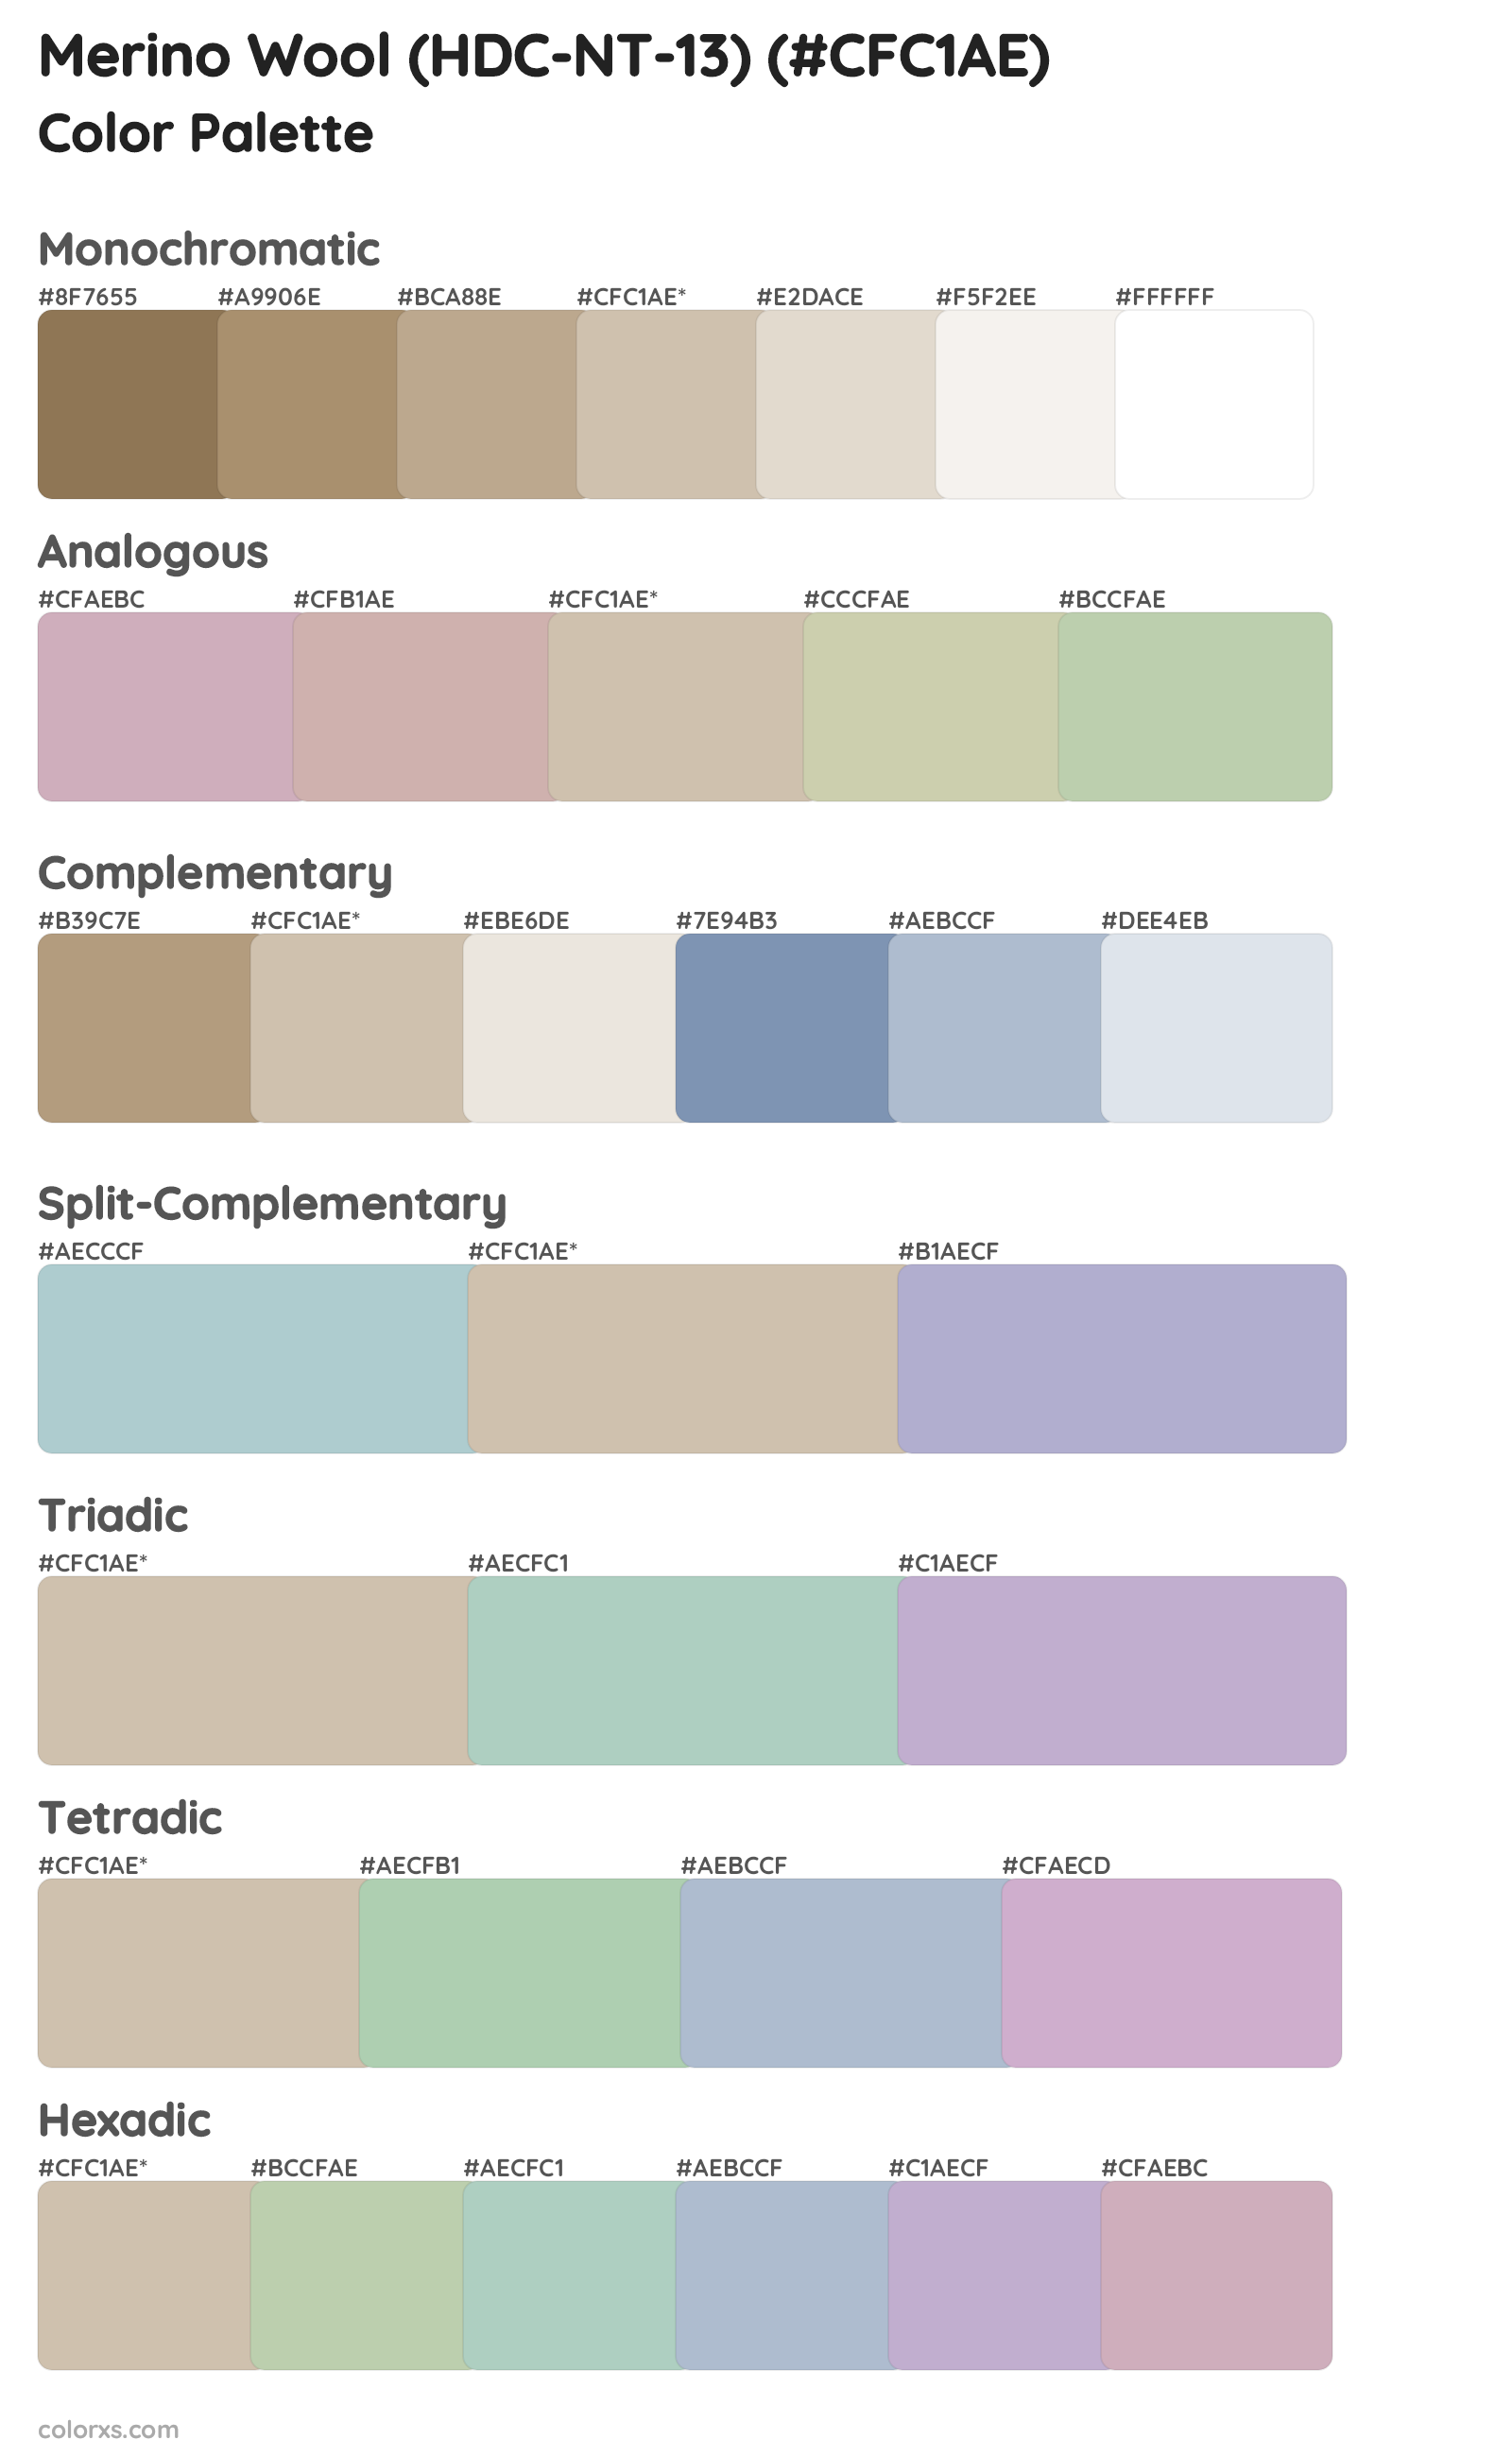 Merino Wool (HDC-NT-13) Color Scheme Palettes